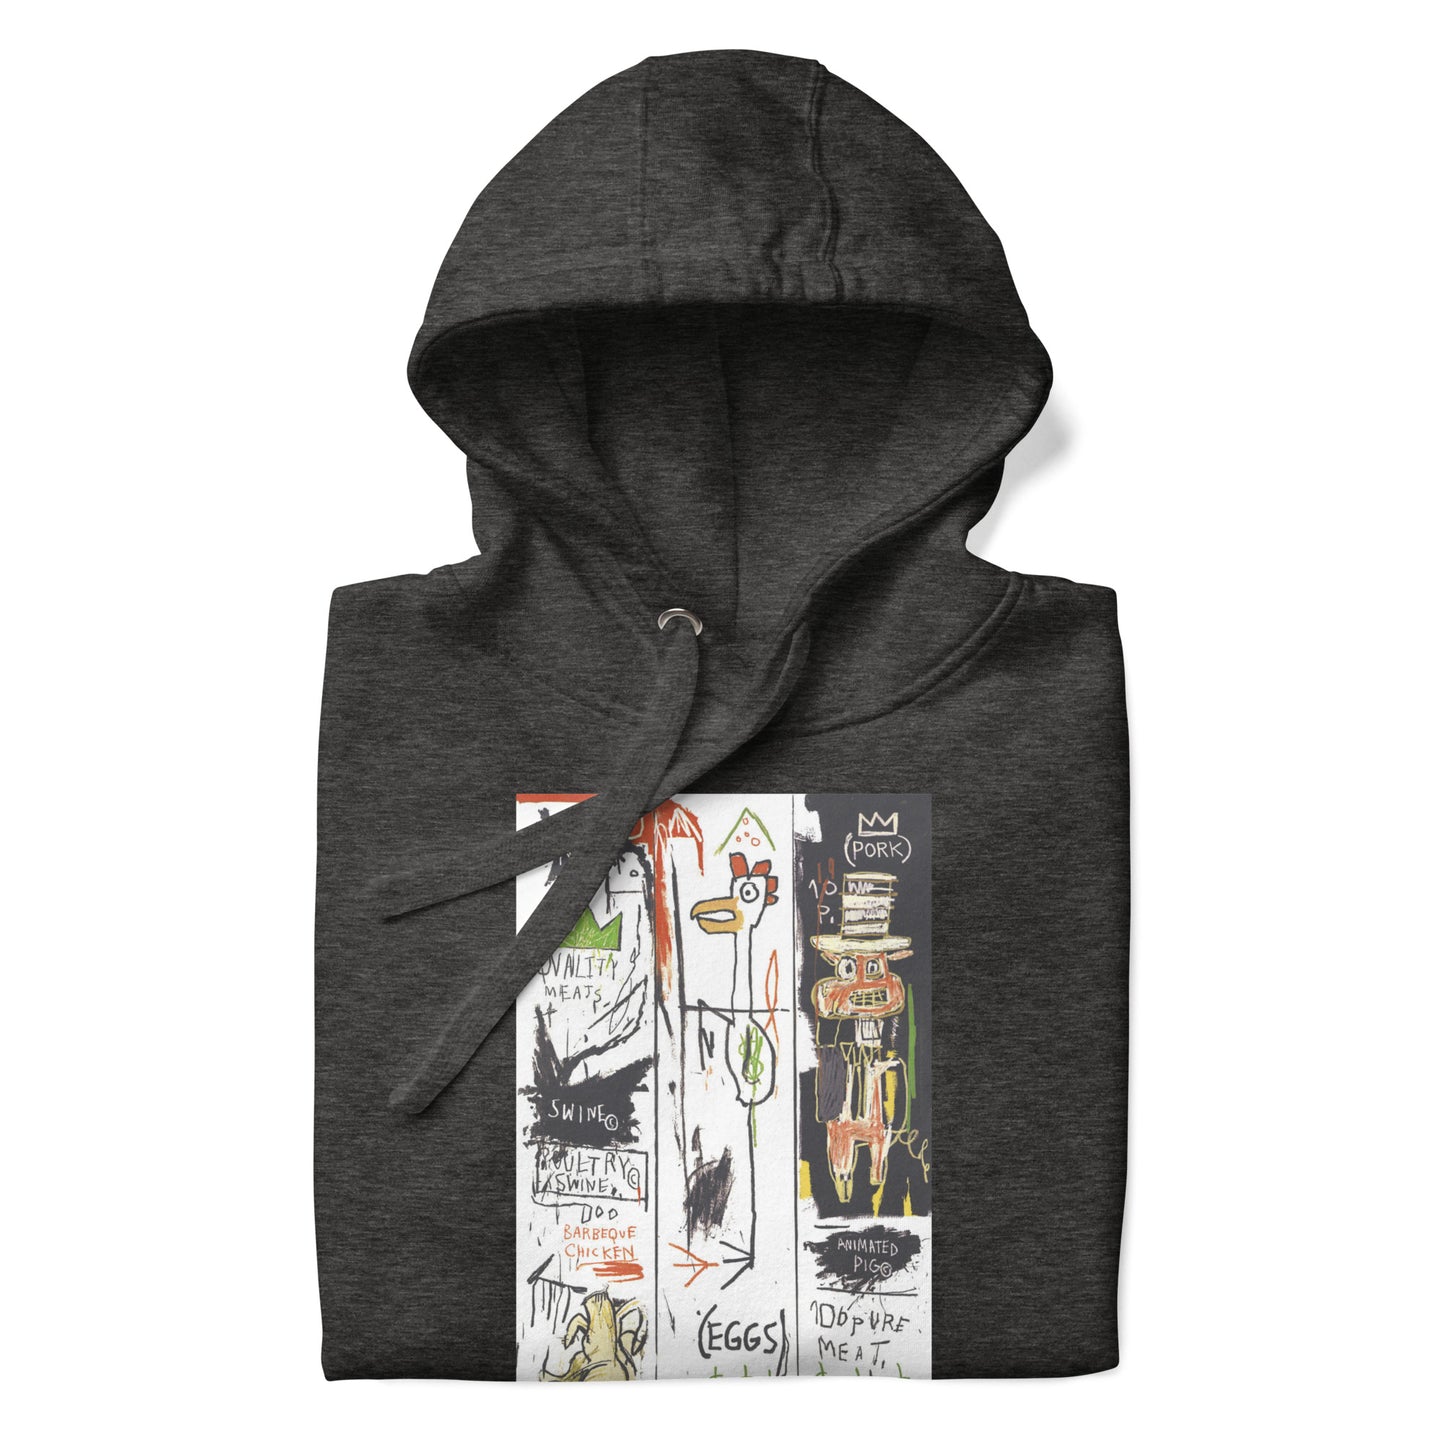 Jean-Michel Basquiat "Quality Meats for the Public" 1982 Artwork Printed Premium Streetwear Sweatshirt Hoodie Charcoal Grey